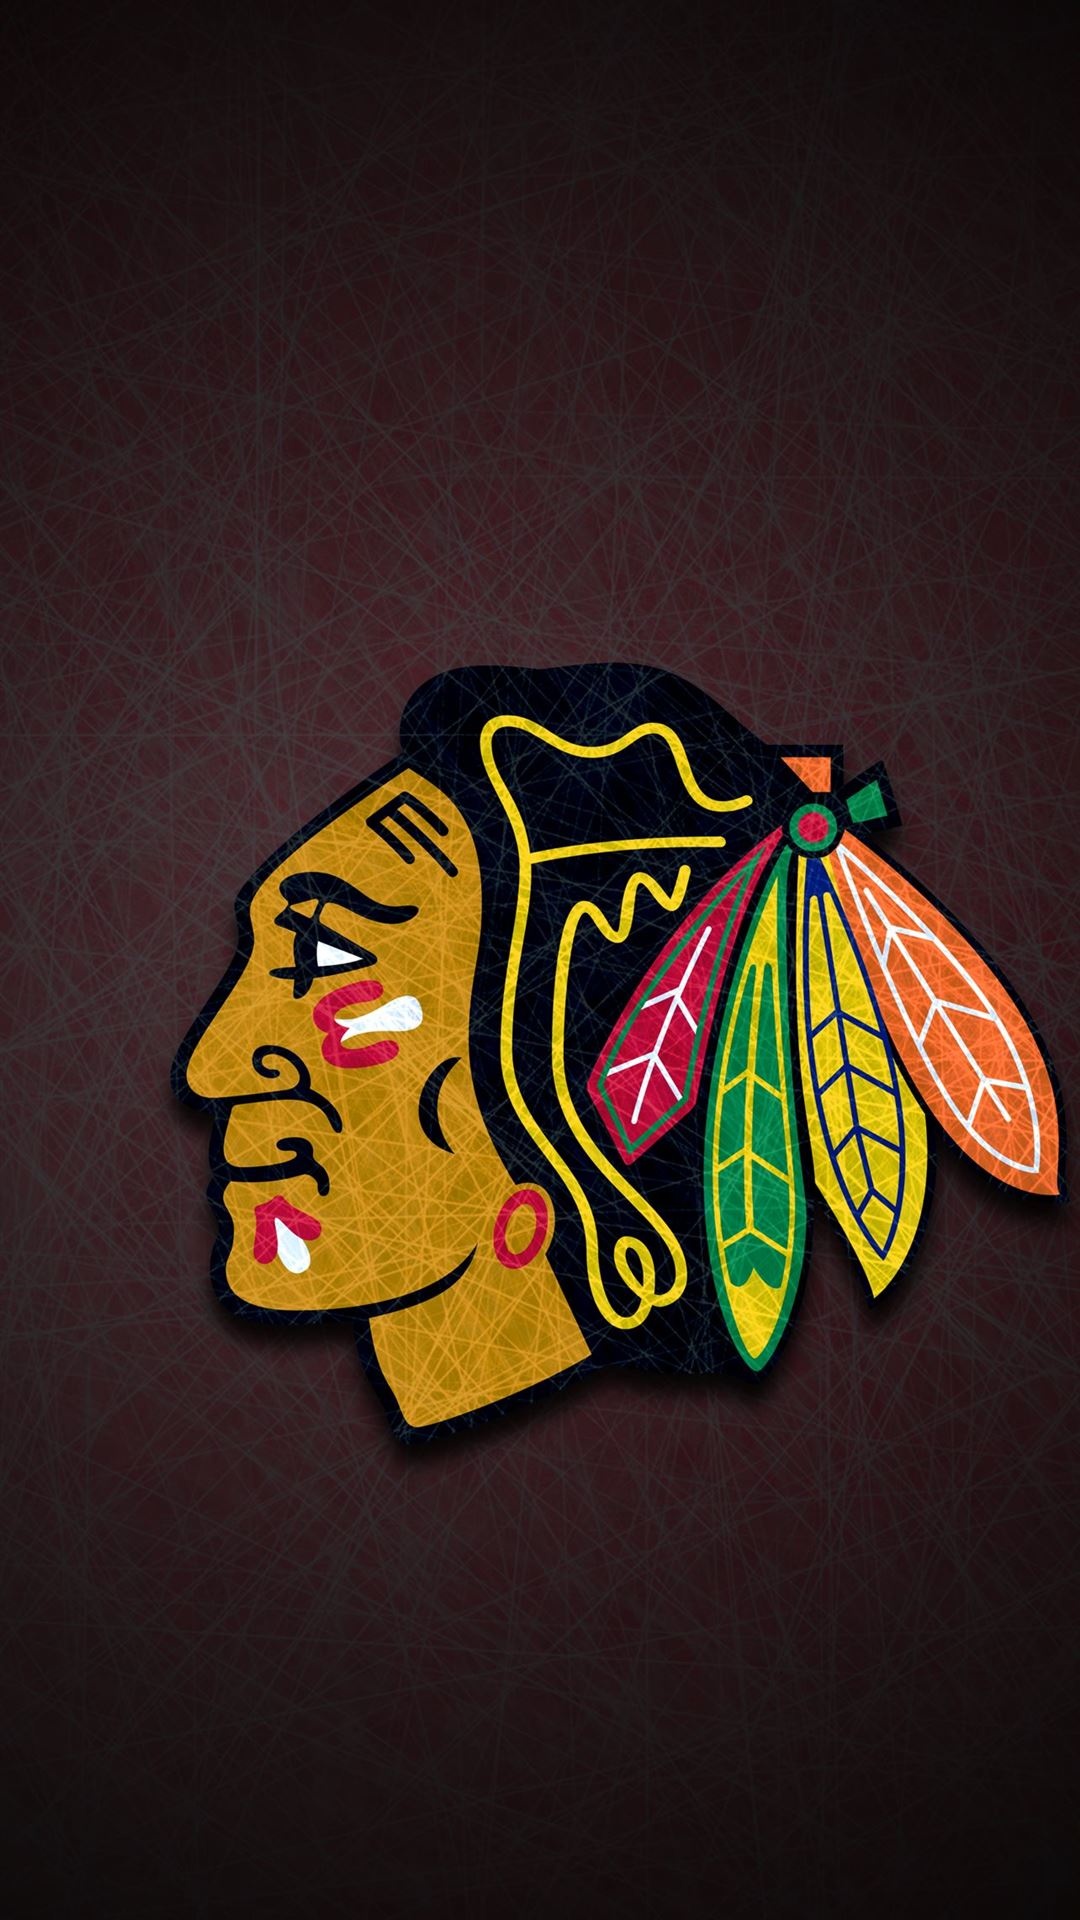 Chicago Blackhawks: A professional ice hockey team, IL. 1080x1920 Full HD Wallpaper.